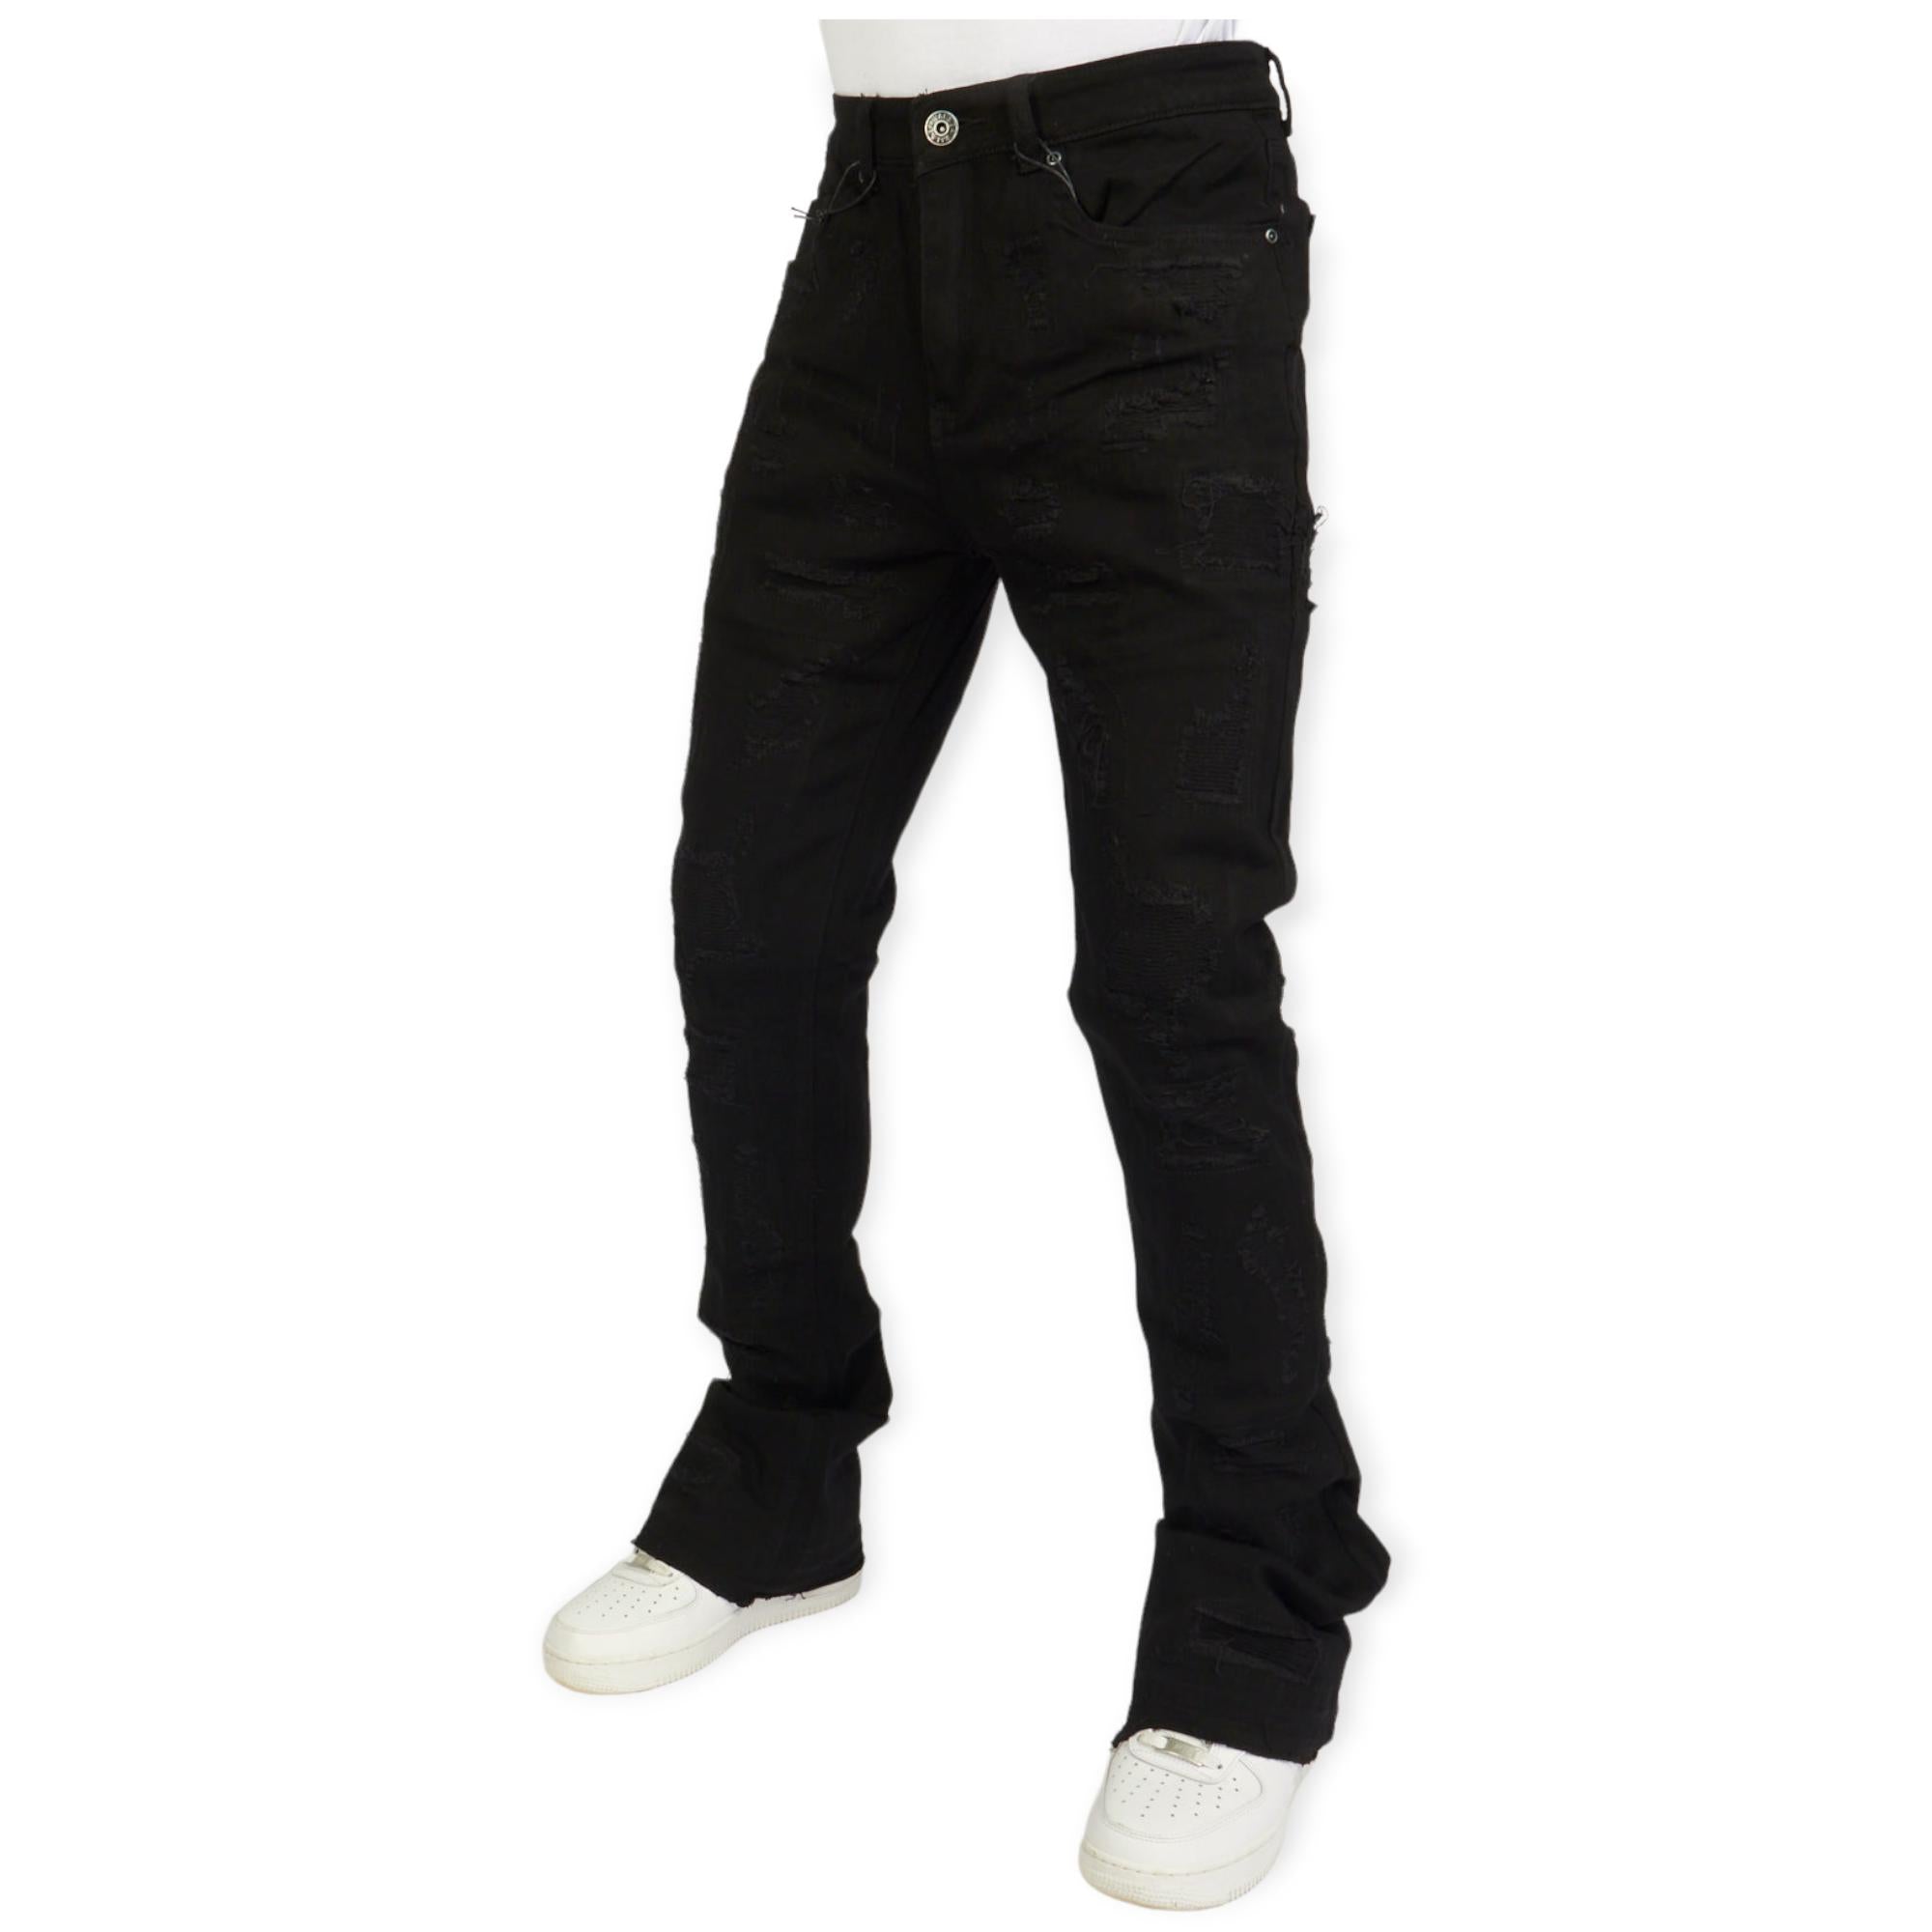 WaiMea RIP Stacked Fit Jeans (Men Multi Stitch (Jet Black)